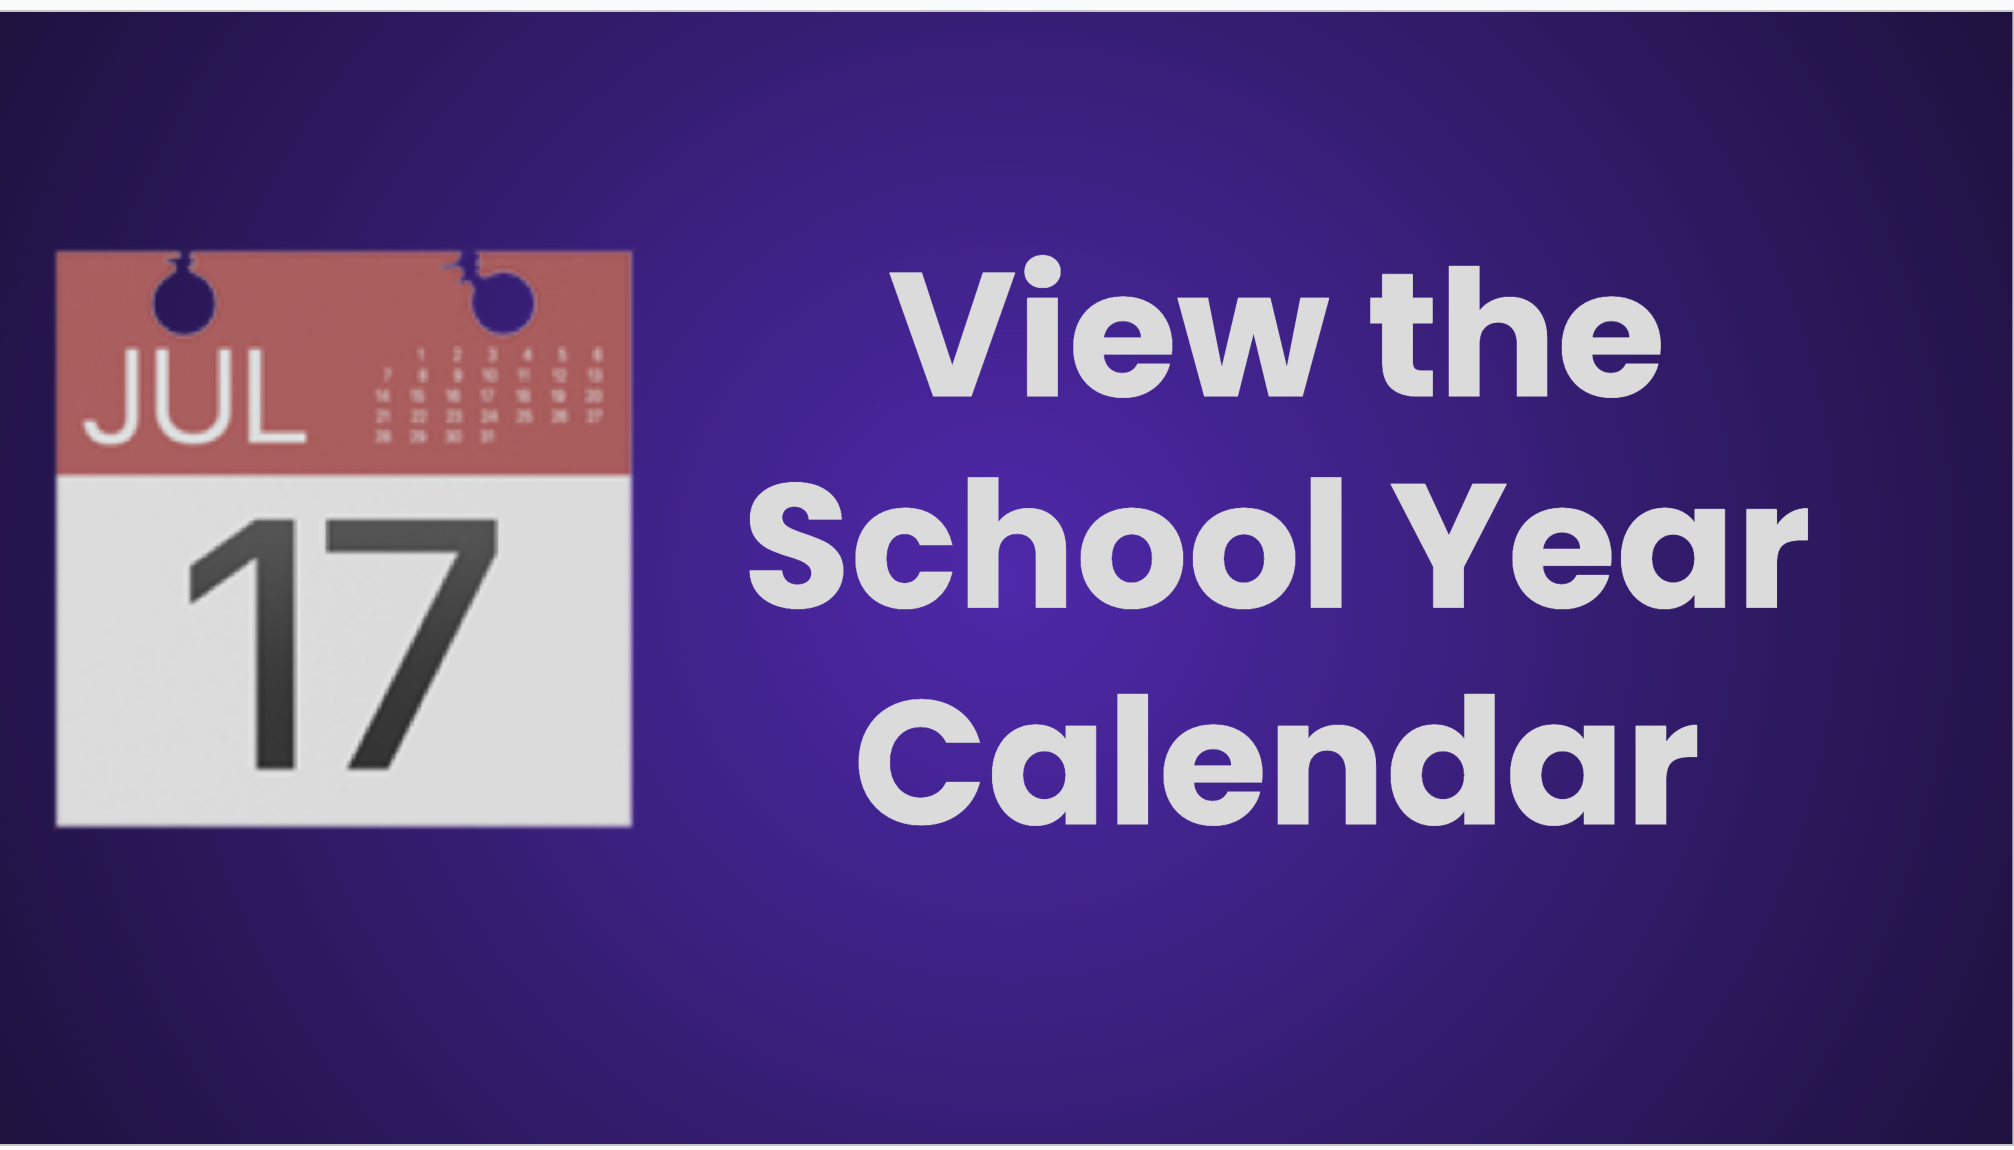 View the School Year Calendar